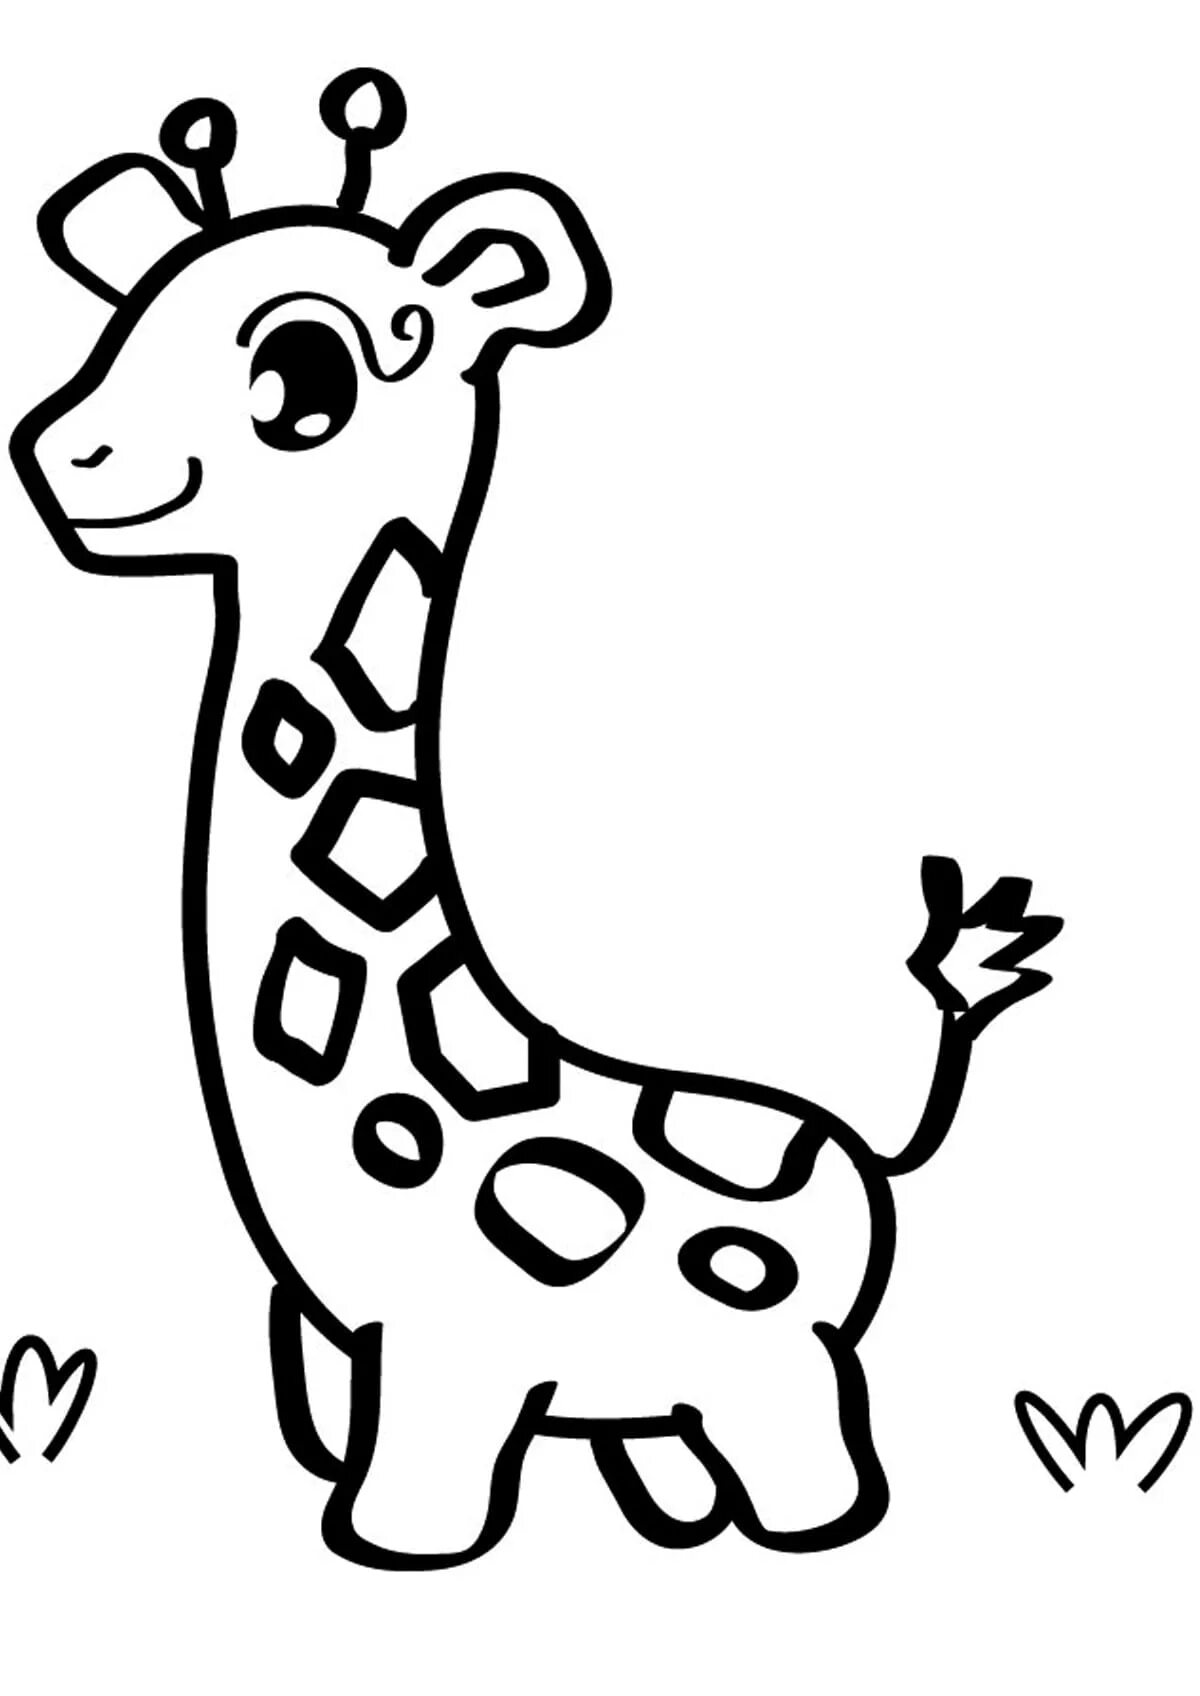 Animal drawings for kids #3